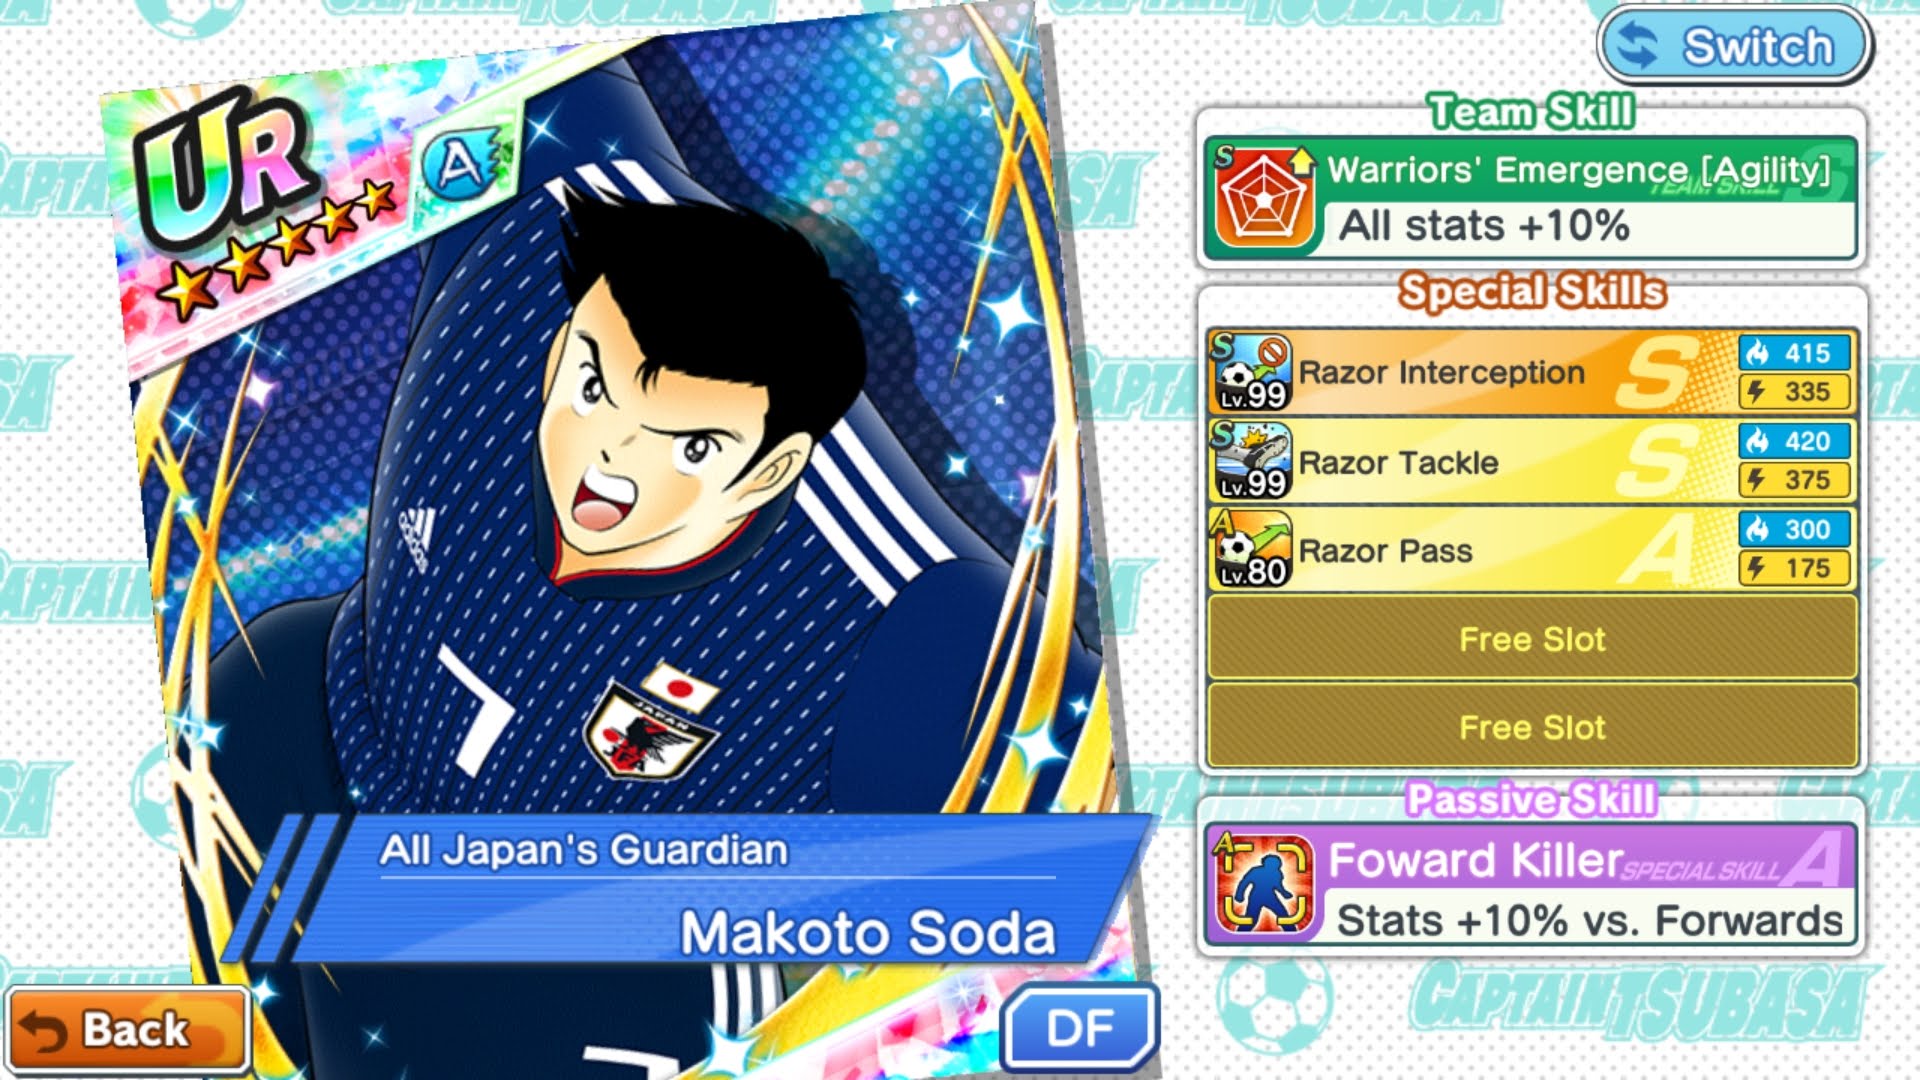 Captain Tsubasa: Dream Team - Tuyển Nhật phiên bản World Cup 2018 đáng sợ ra sao?